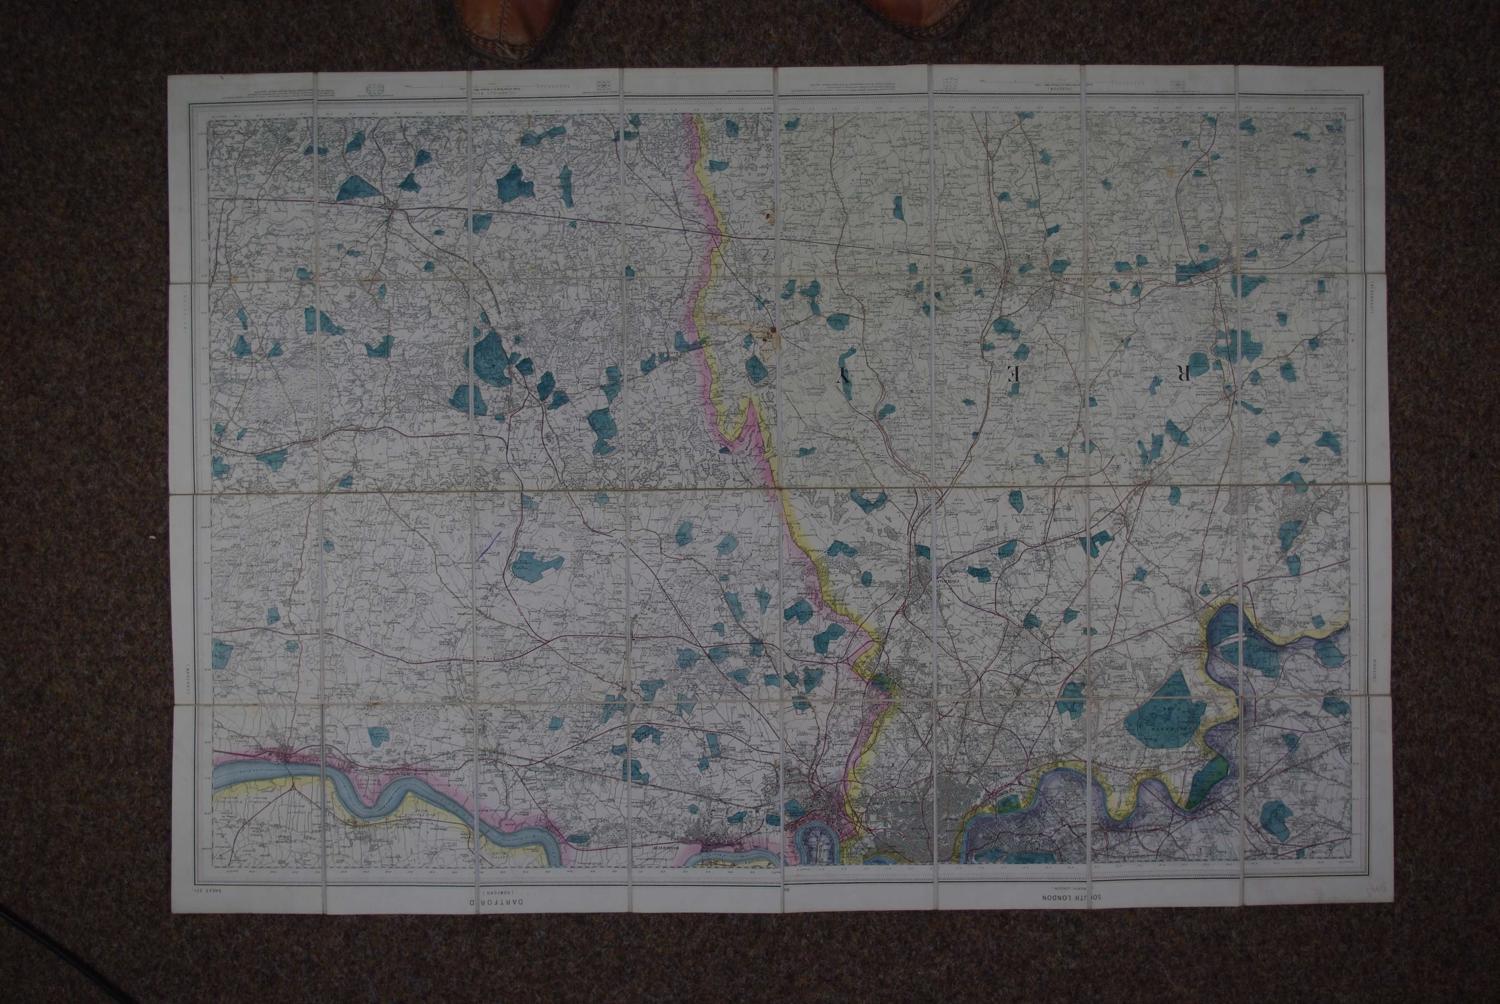 Ordnance Survey Map Sheet no 271 by Ordnance Survey - Colonel A.C. Coo